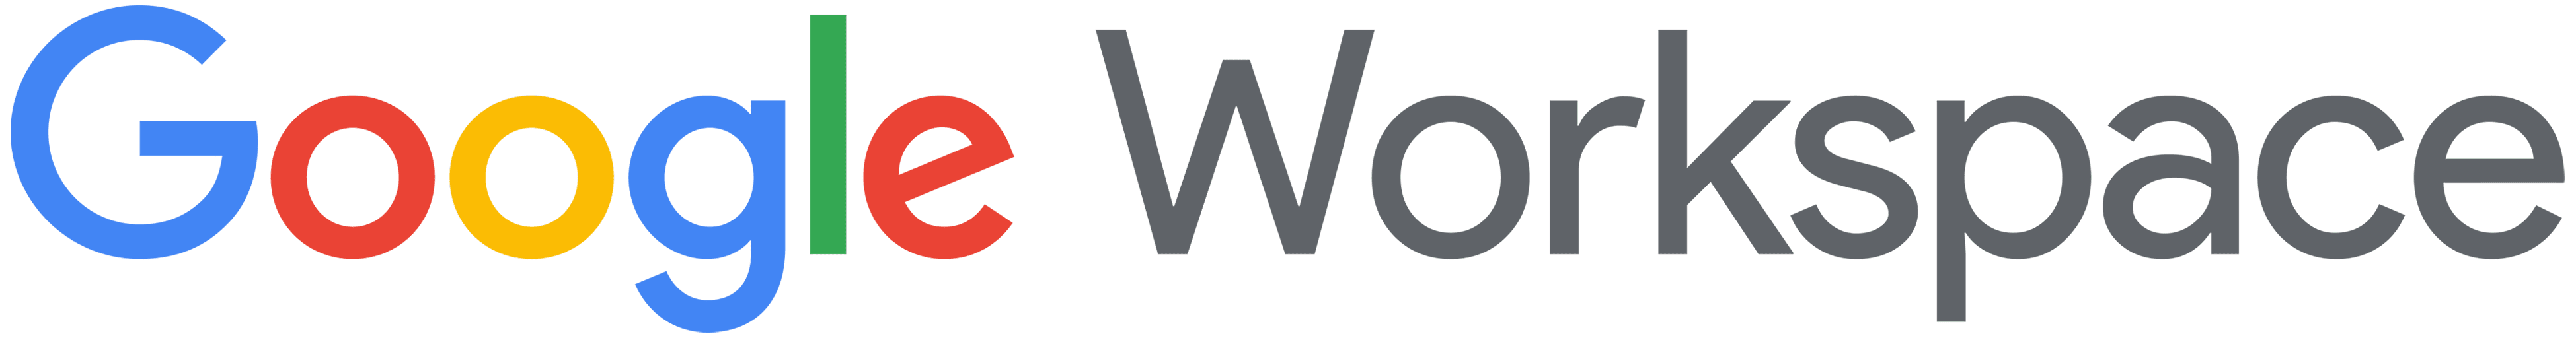 Google_Workspace Logo